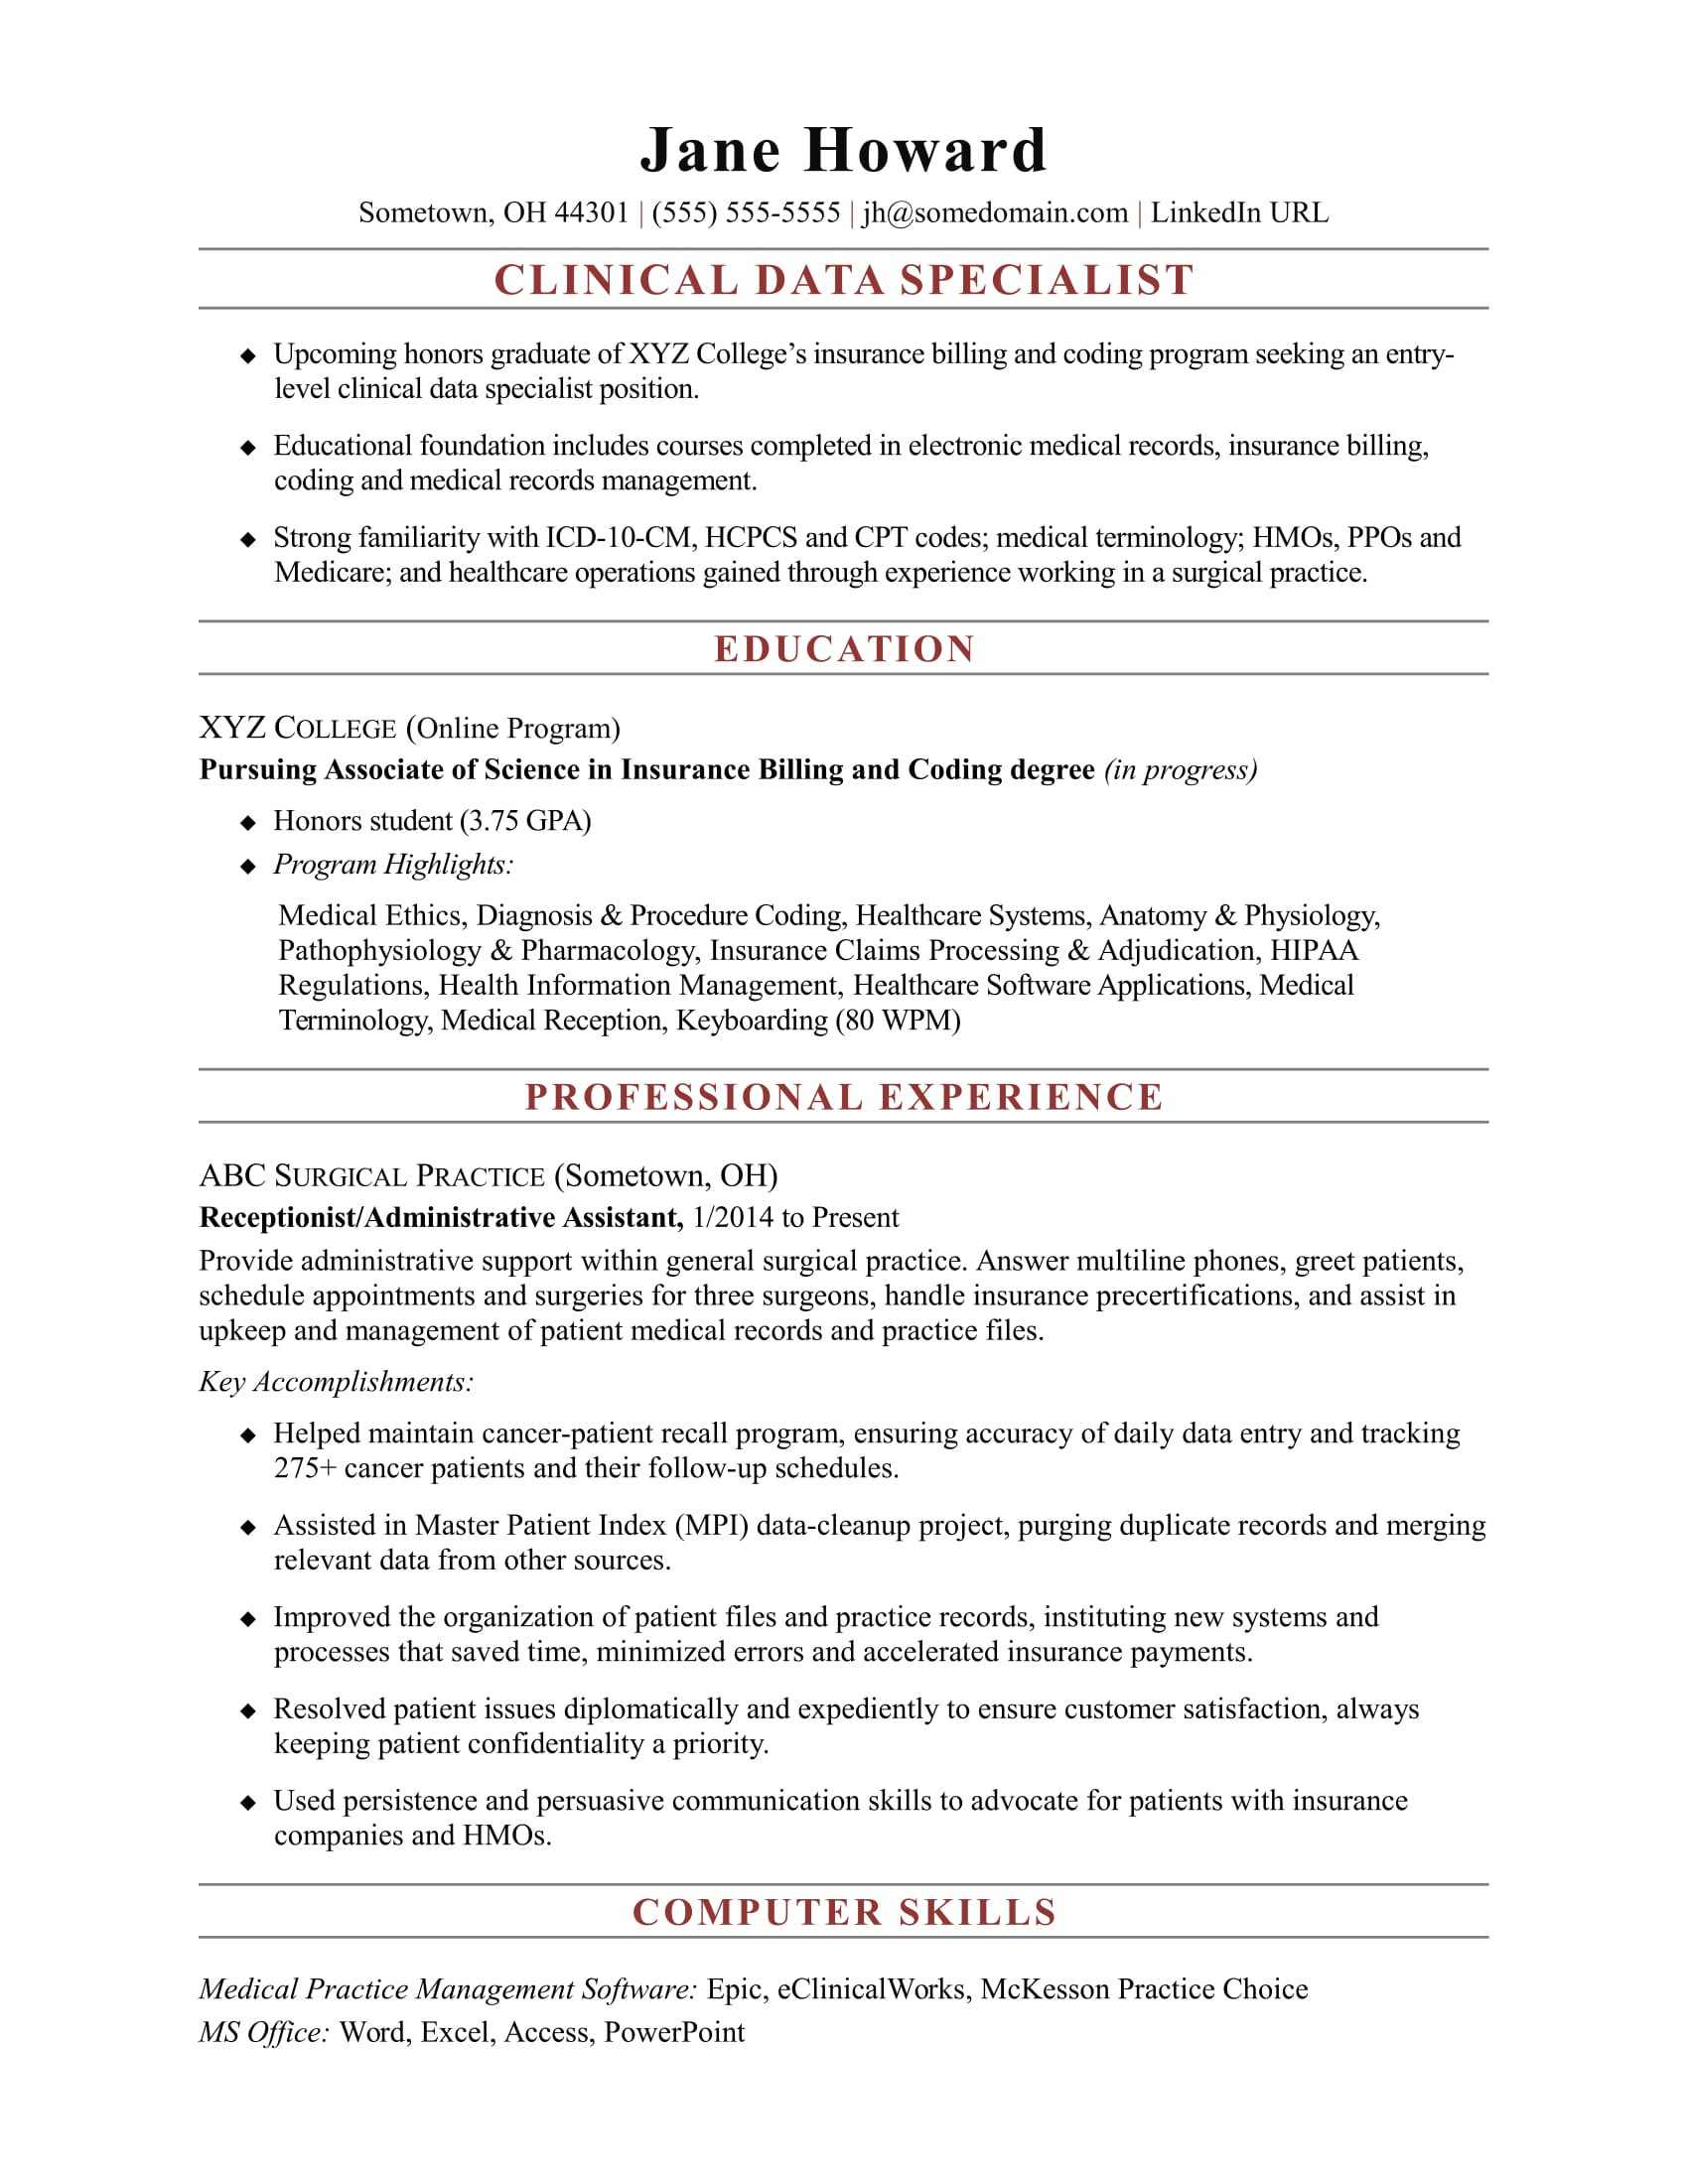 Data Entry Job Description Resume Sample Entry-level Clinical Data Specialist Resume Sample Monster.com